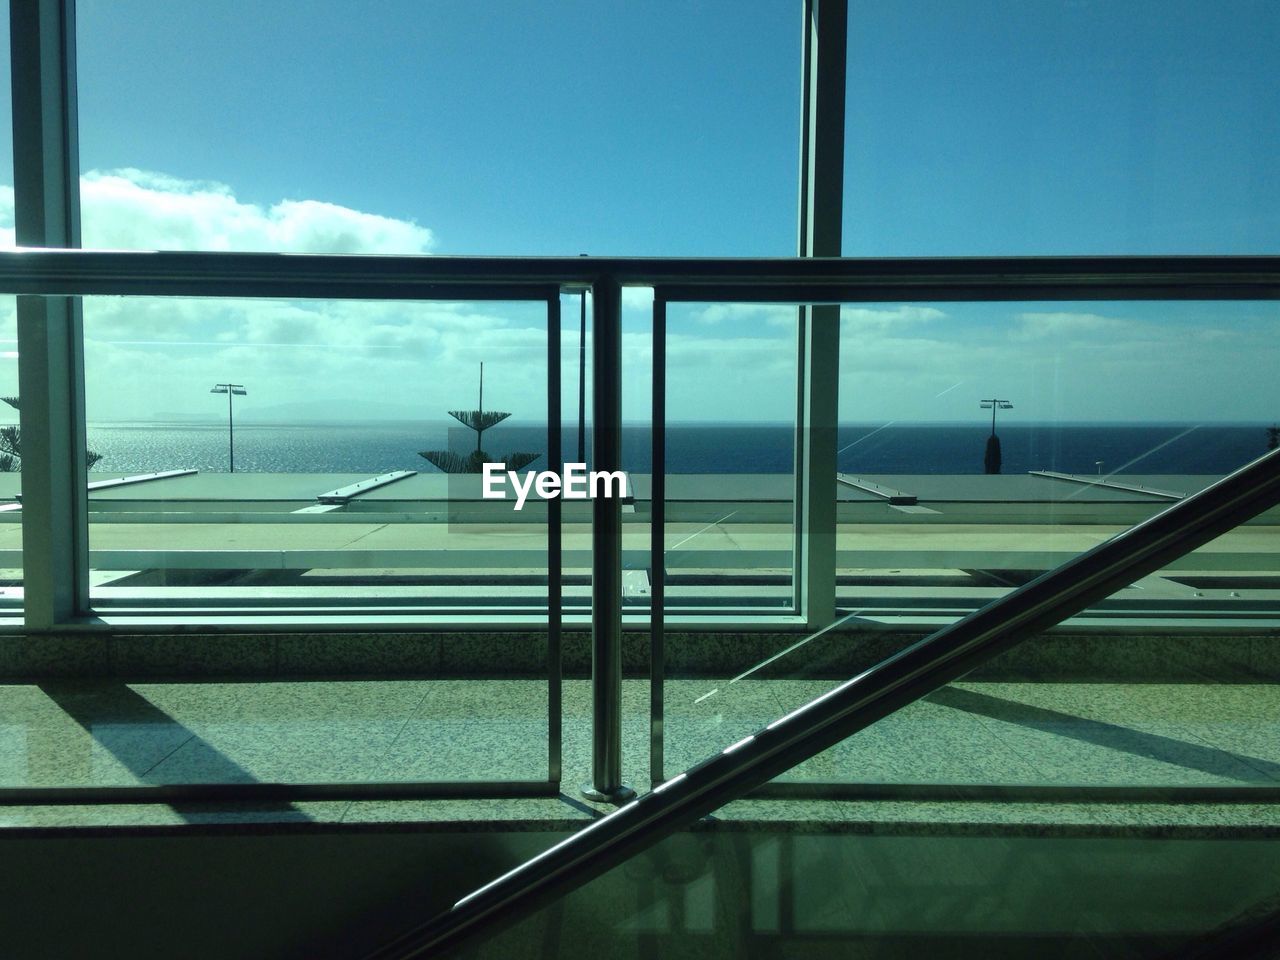 Sea seen through glass window of modern building